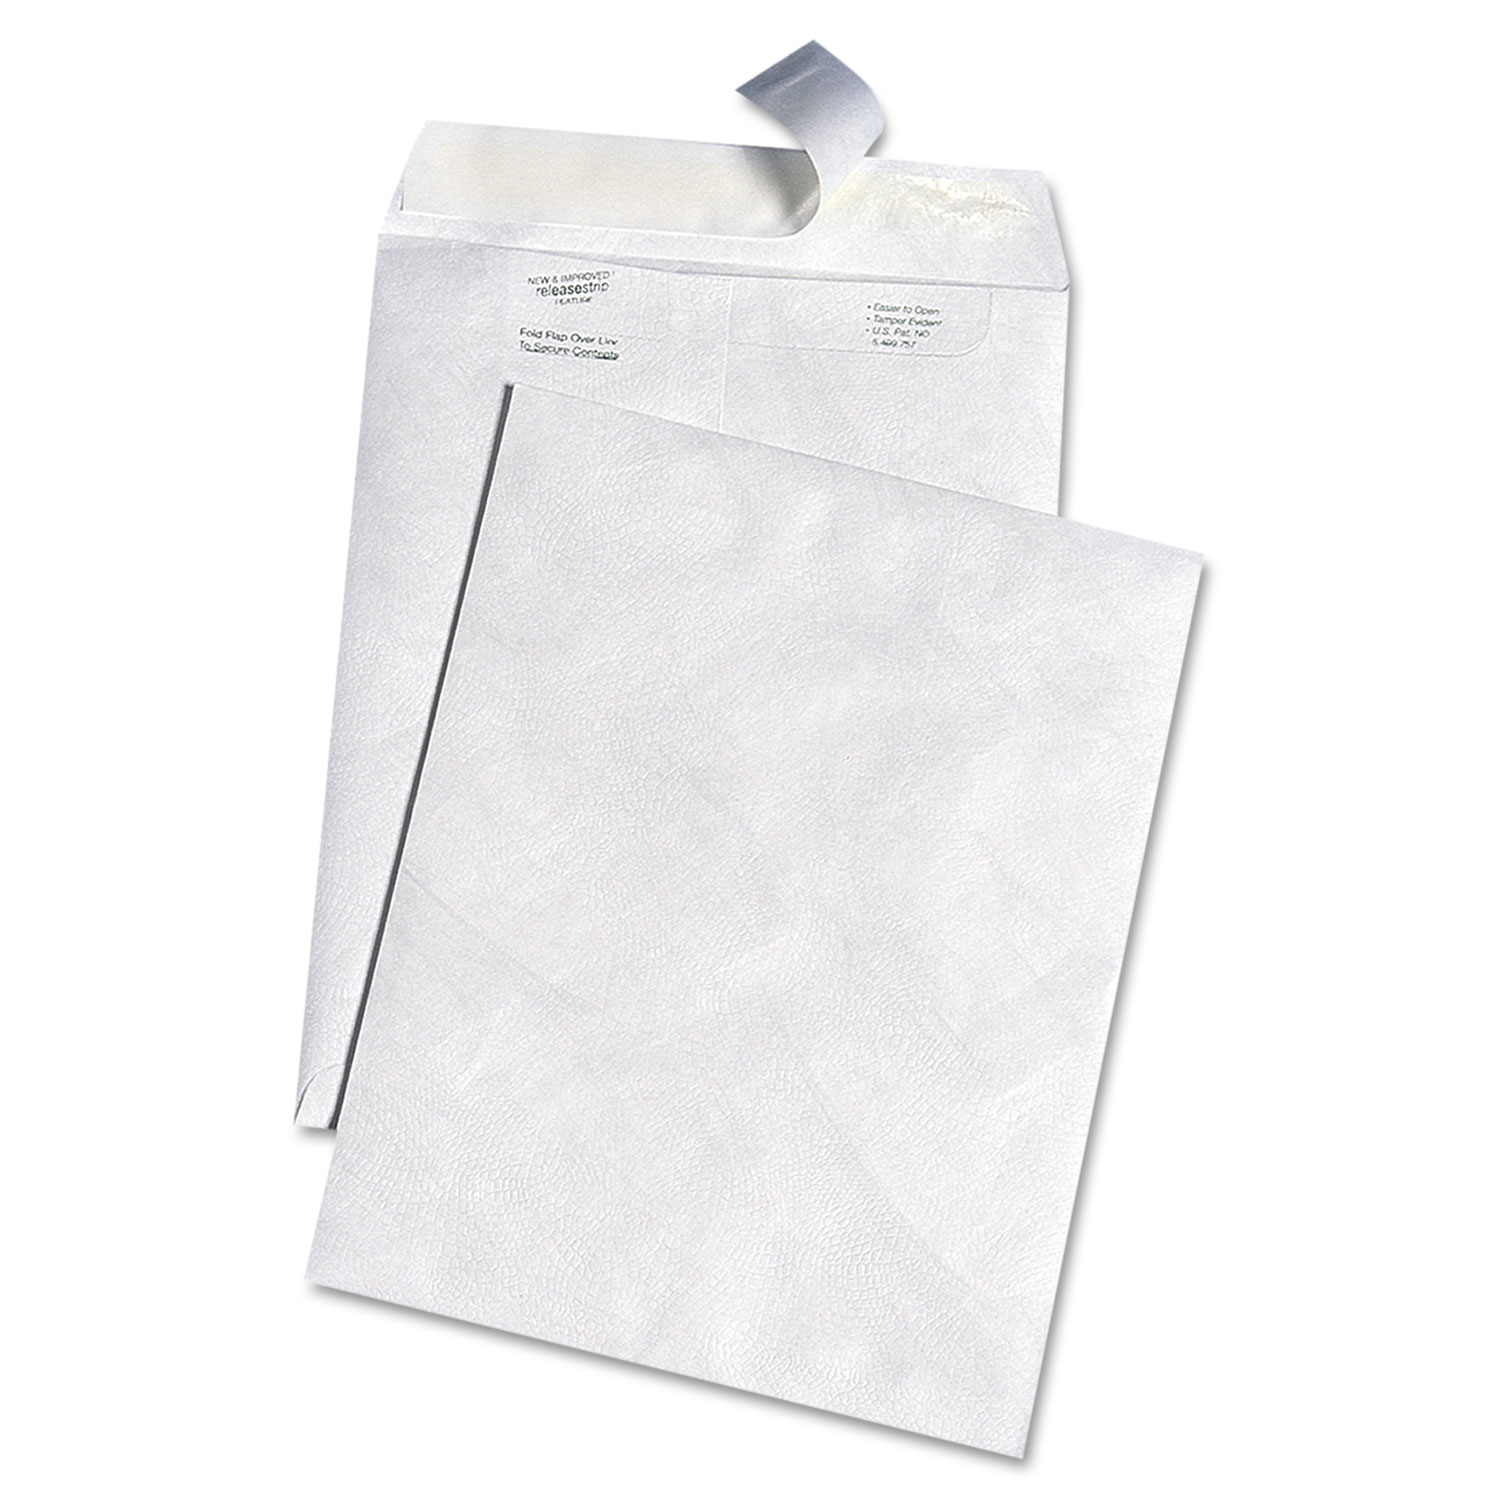  Survivor QUAR3120 White Leather Envelopes of DuPont Tyvek, #10 1/2, Cheese Blade Flap, Self-Adhesive Closure, 9 x 12, White, 100/Box (QUAR3120) 